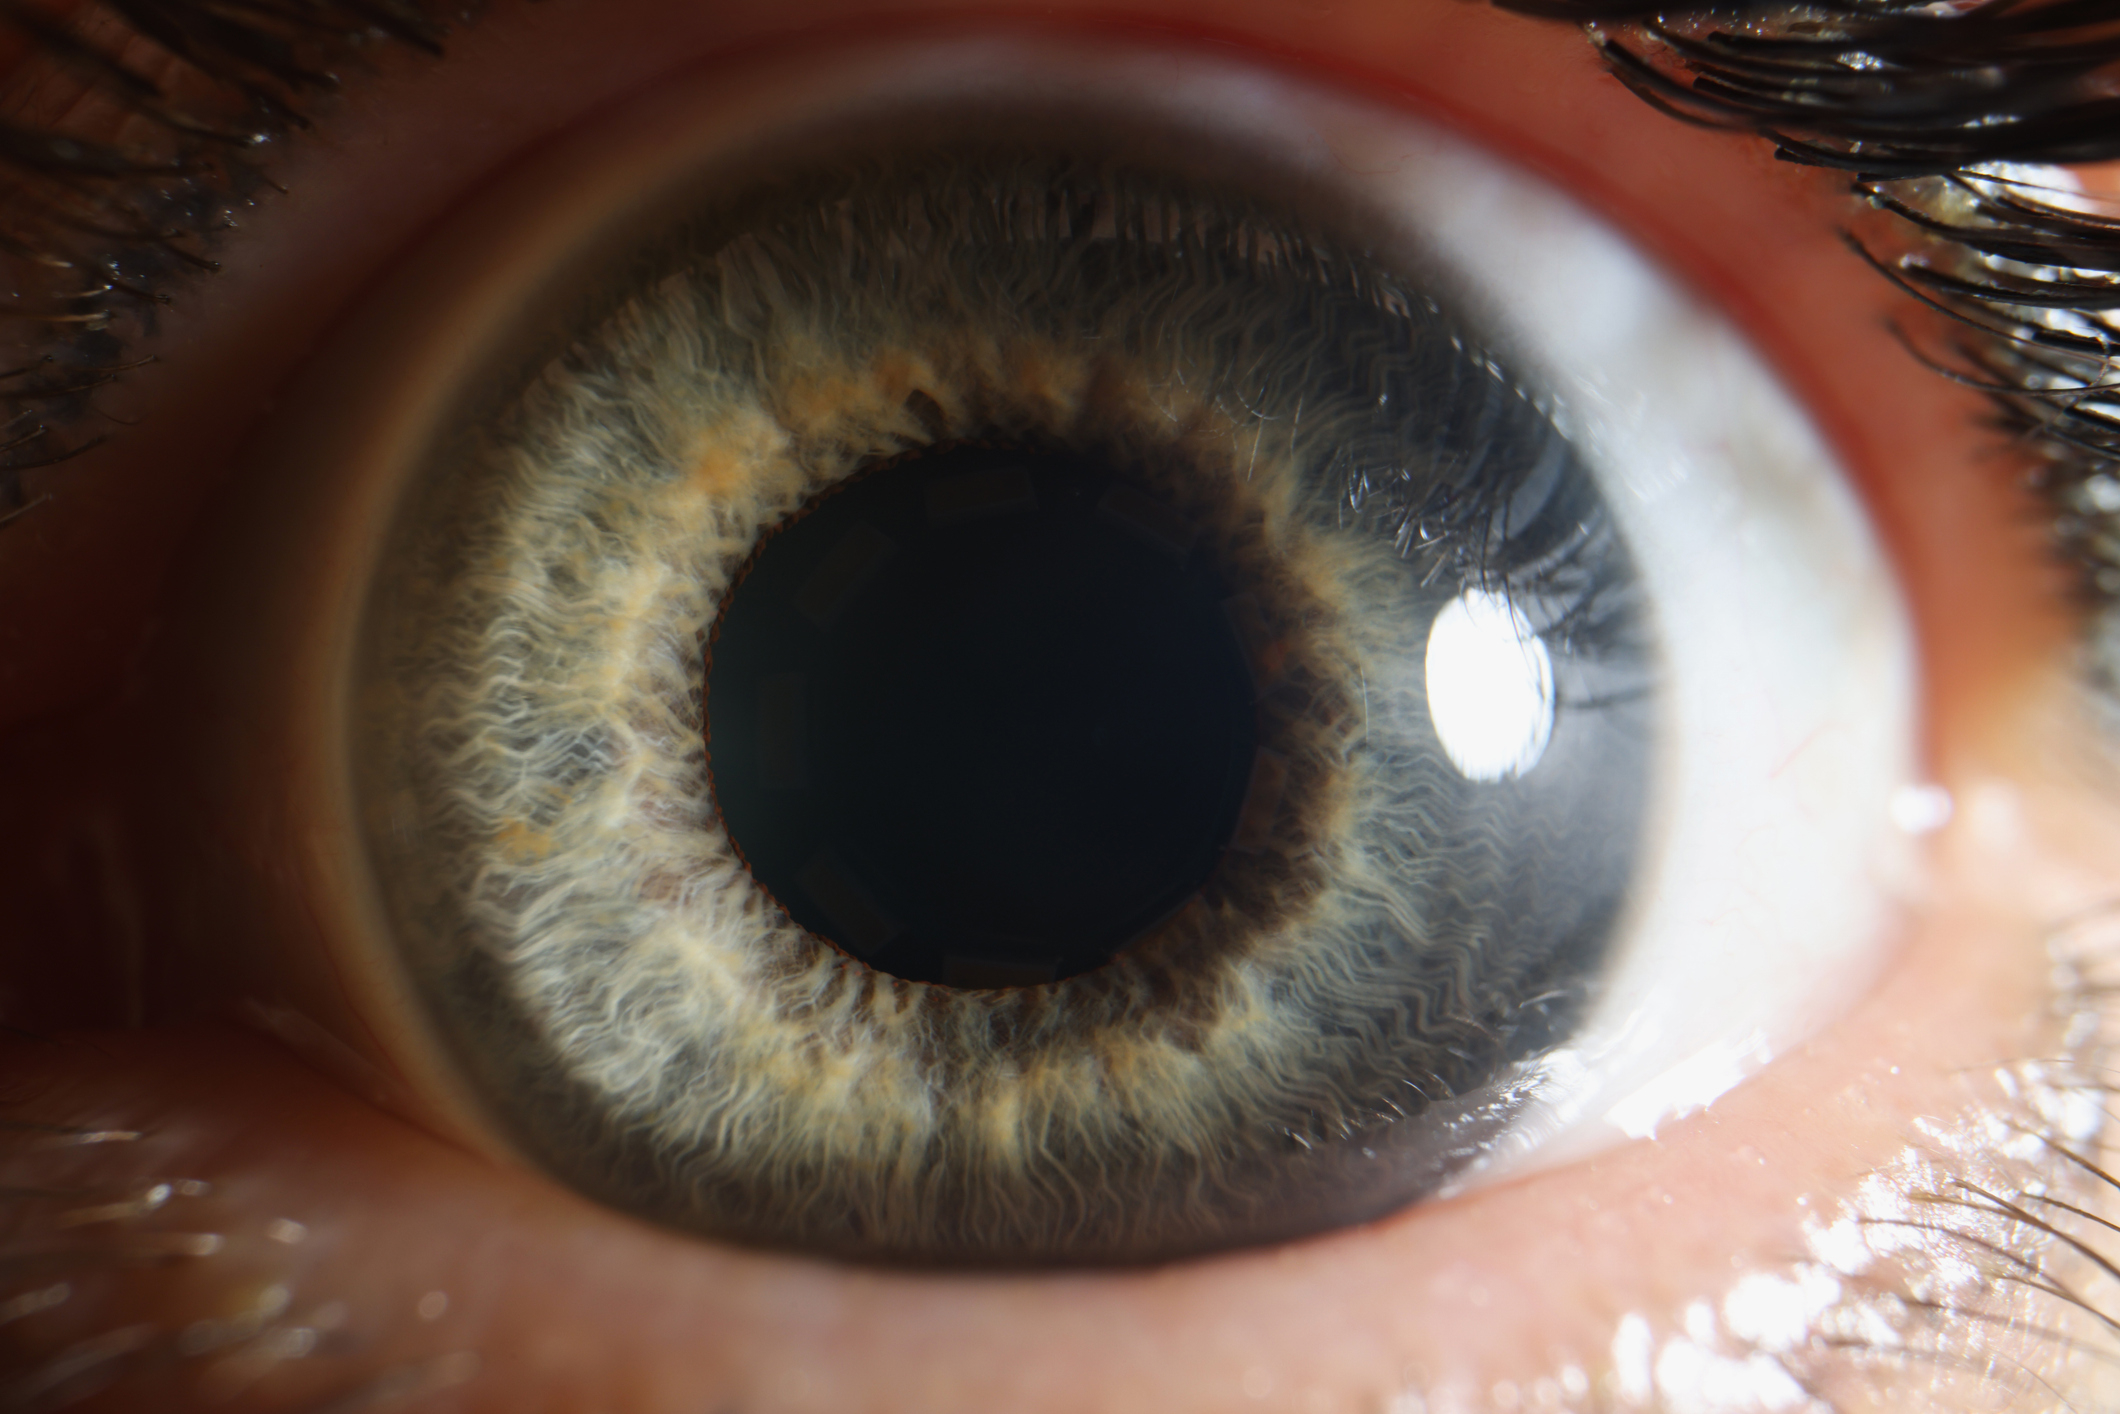 Close-up of a human eye, showing the iris detail and eyelashes, illustrating eye anatomy